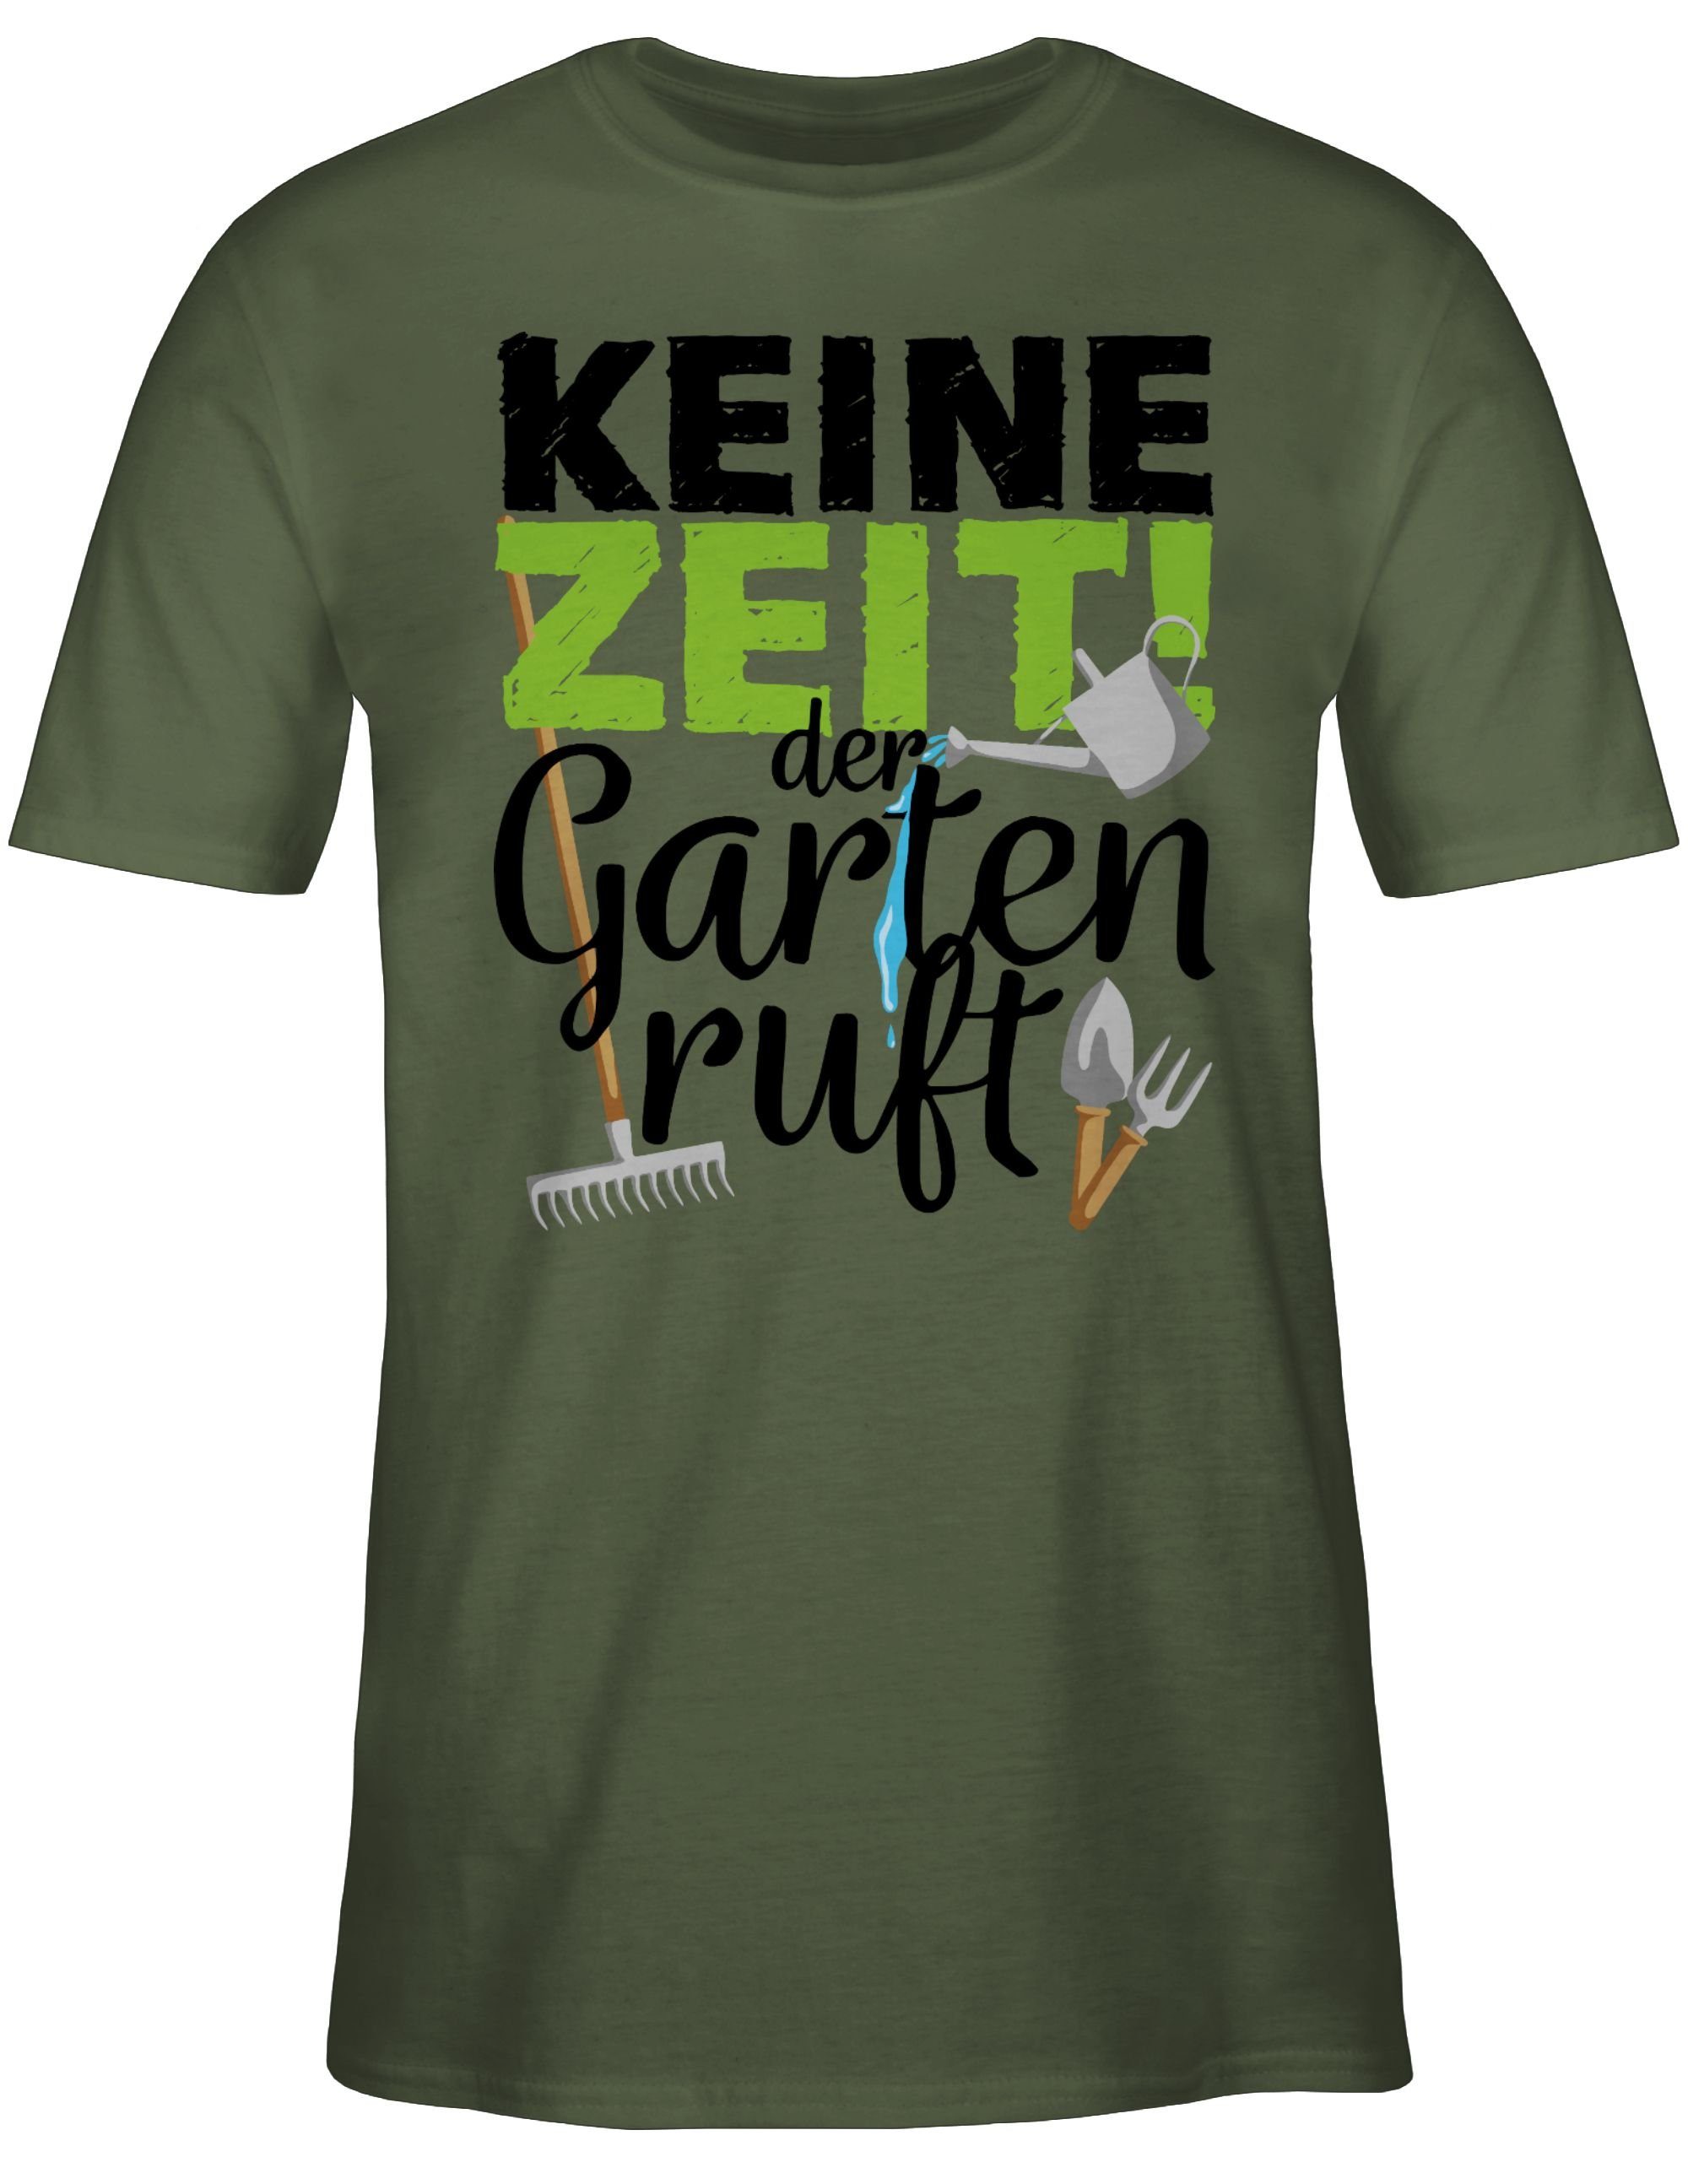 Shirtracer Army Outfit Garten 1 ruft Keine - Zeit Grün Hobby Gartengeräte der T-Shirt